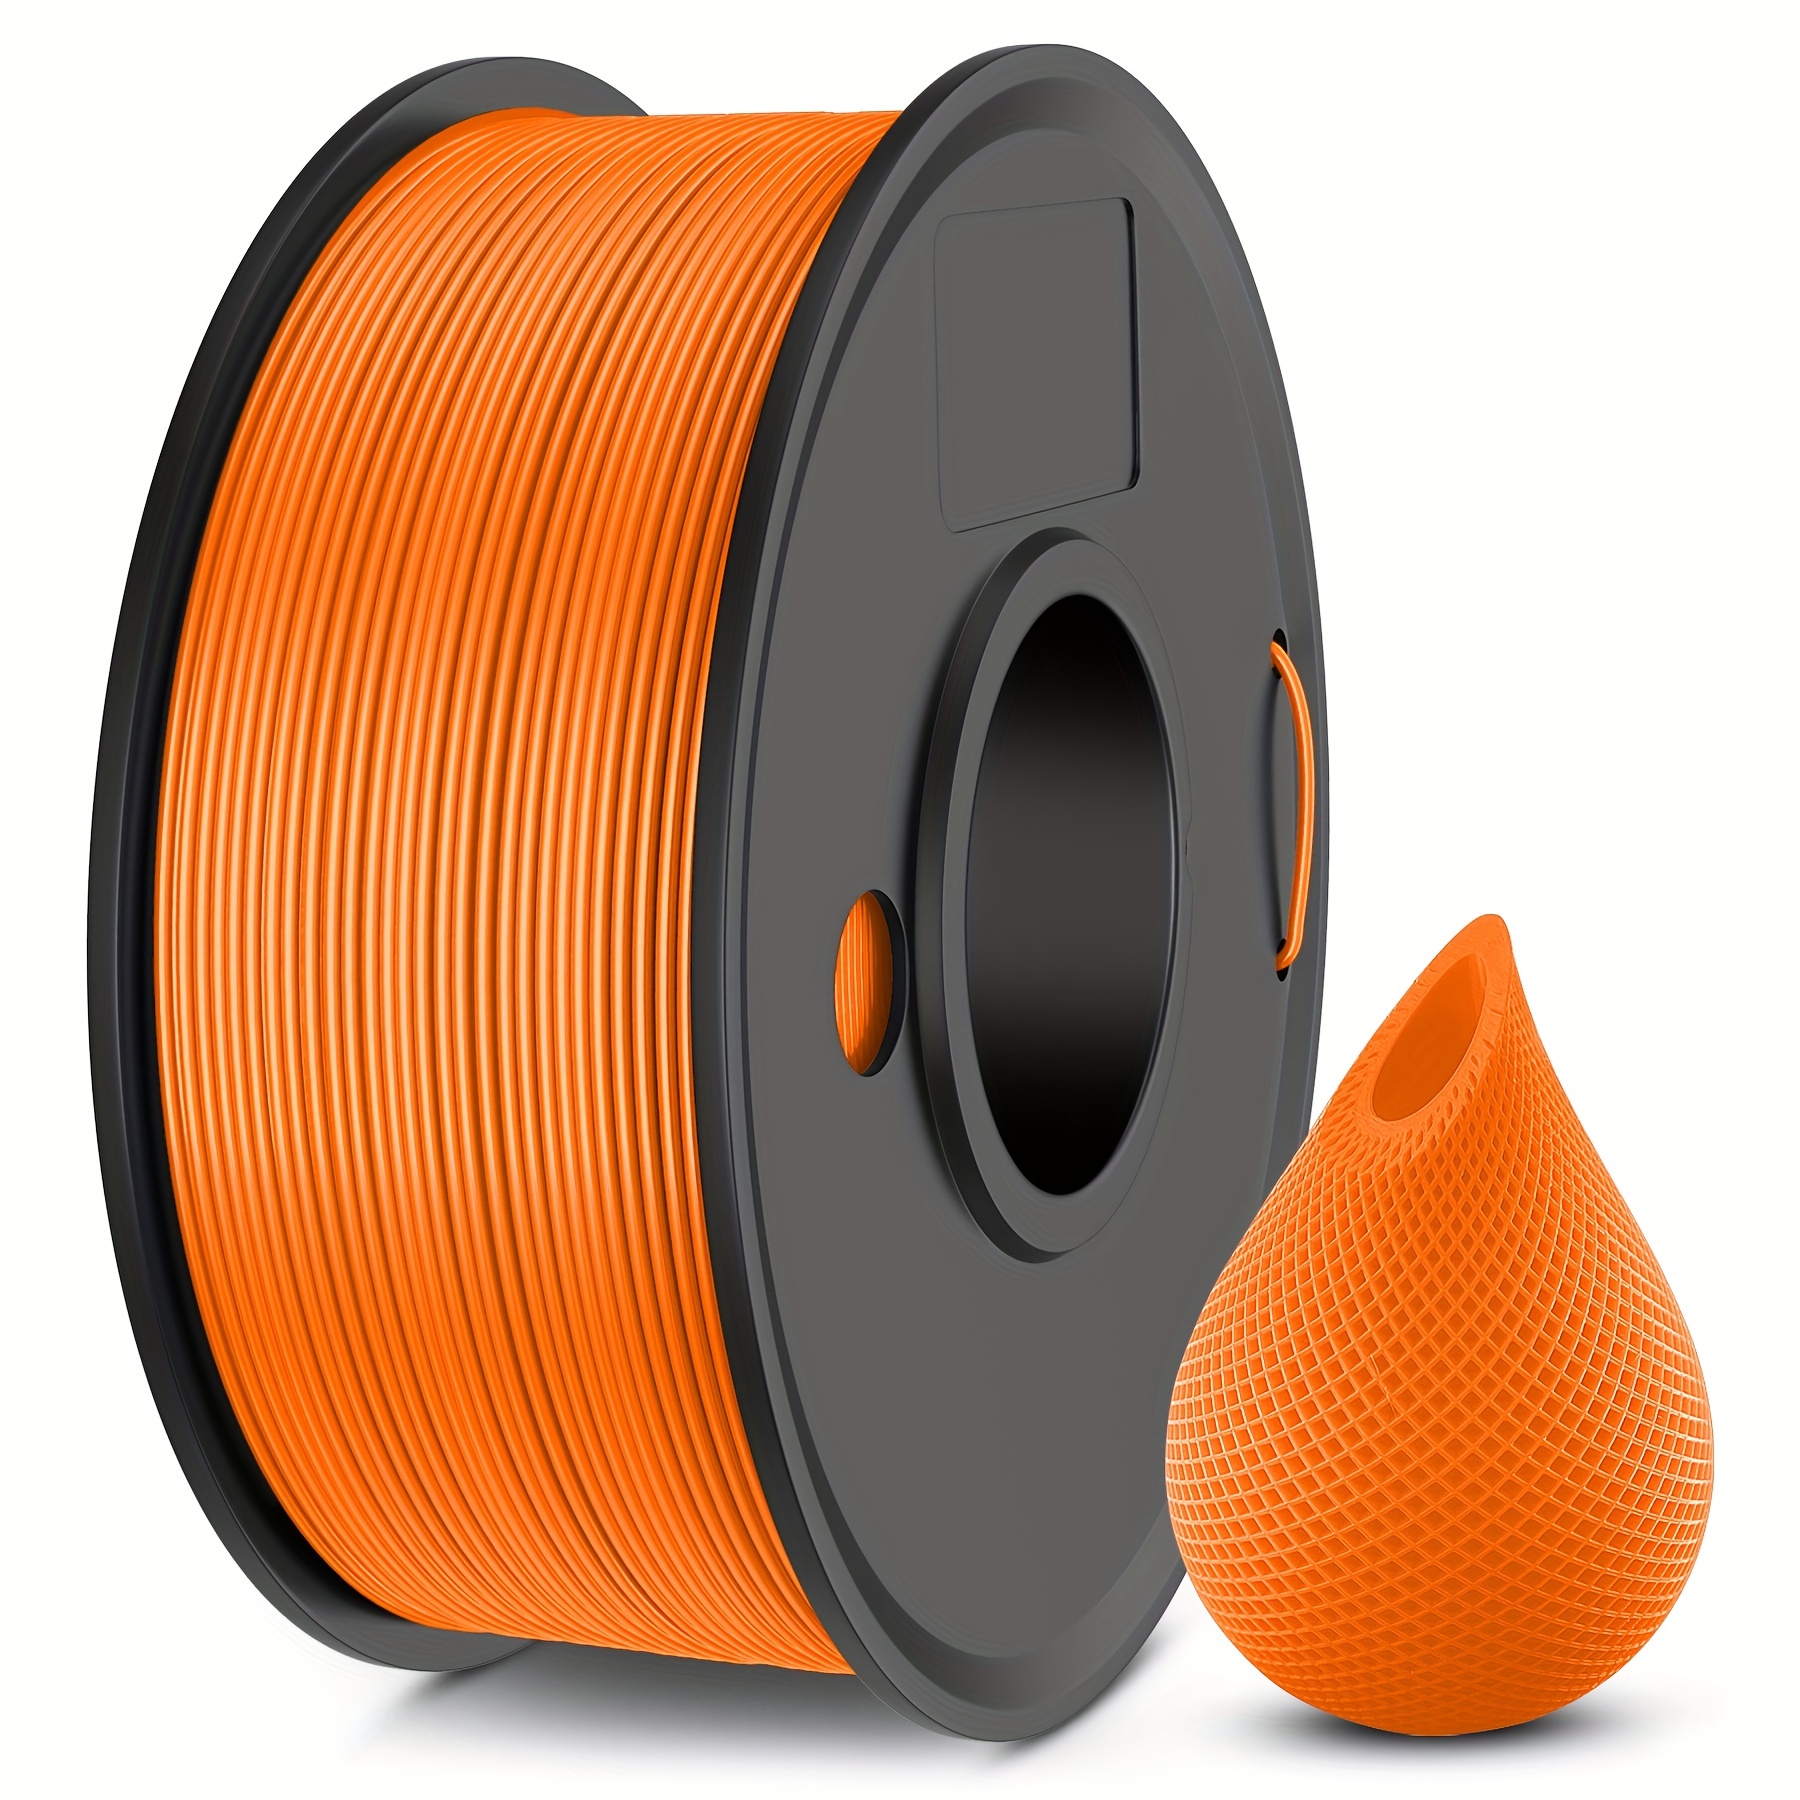  SUNLU PETG Filament 1.75mm, Strong Neatly Wound PETG 3D Printer  Filament 1.75mm ±0.02mm, Good Toughness, Fit Most FDM 3D Printers, Good  Vacuum Packaging, 1kg Spool (2.2lbs), PETG Filament, Black : Industrial